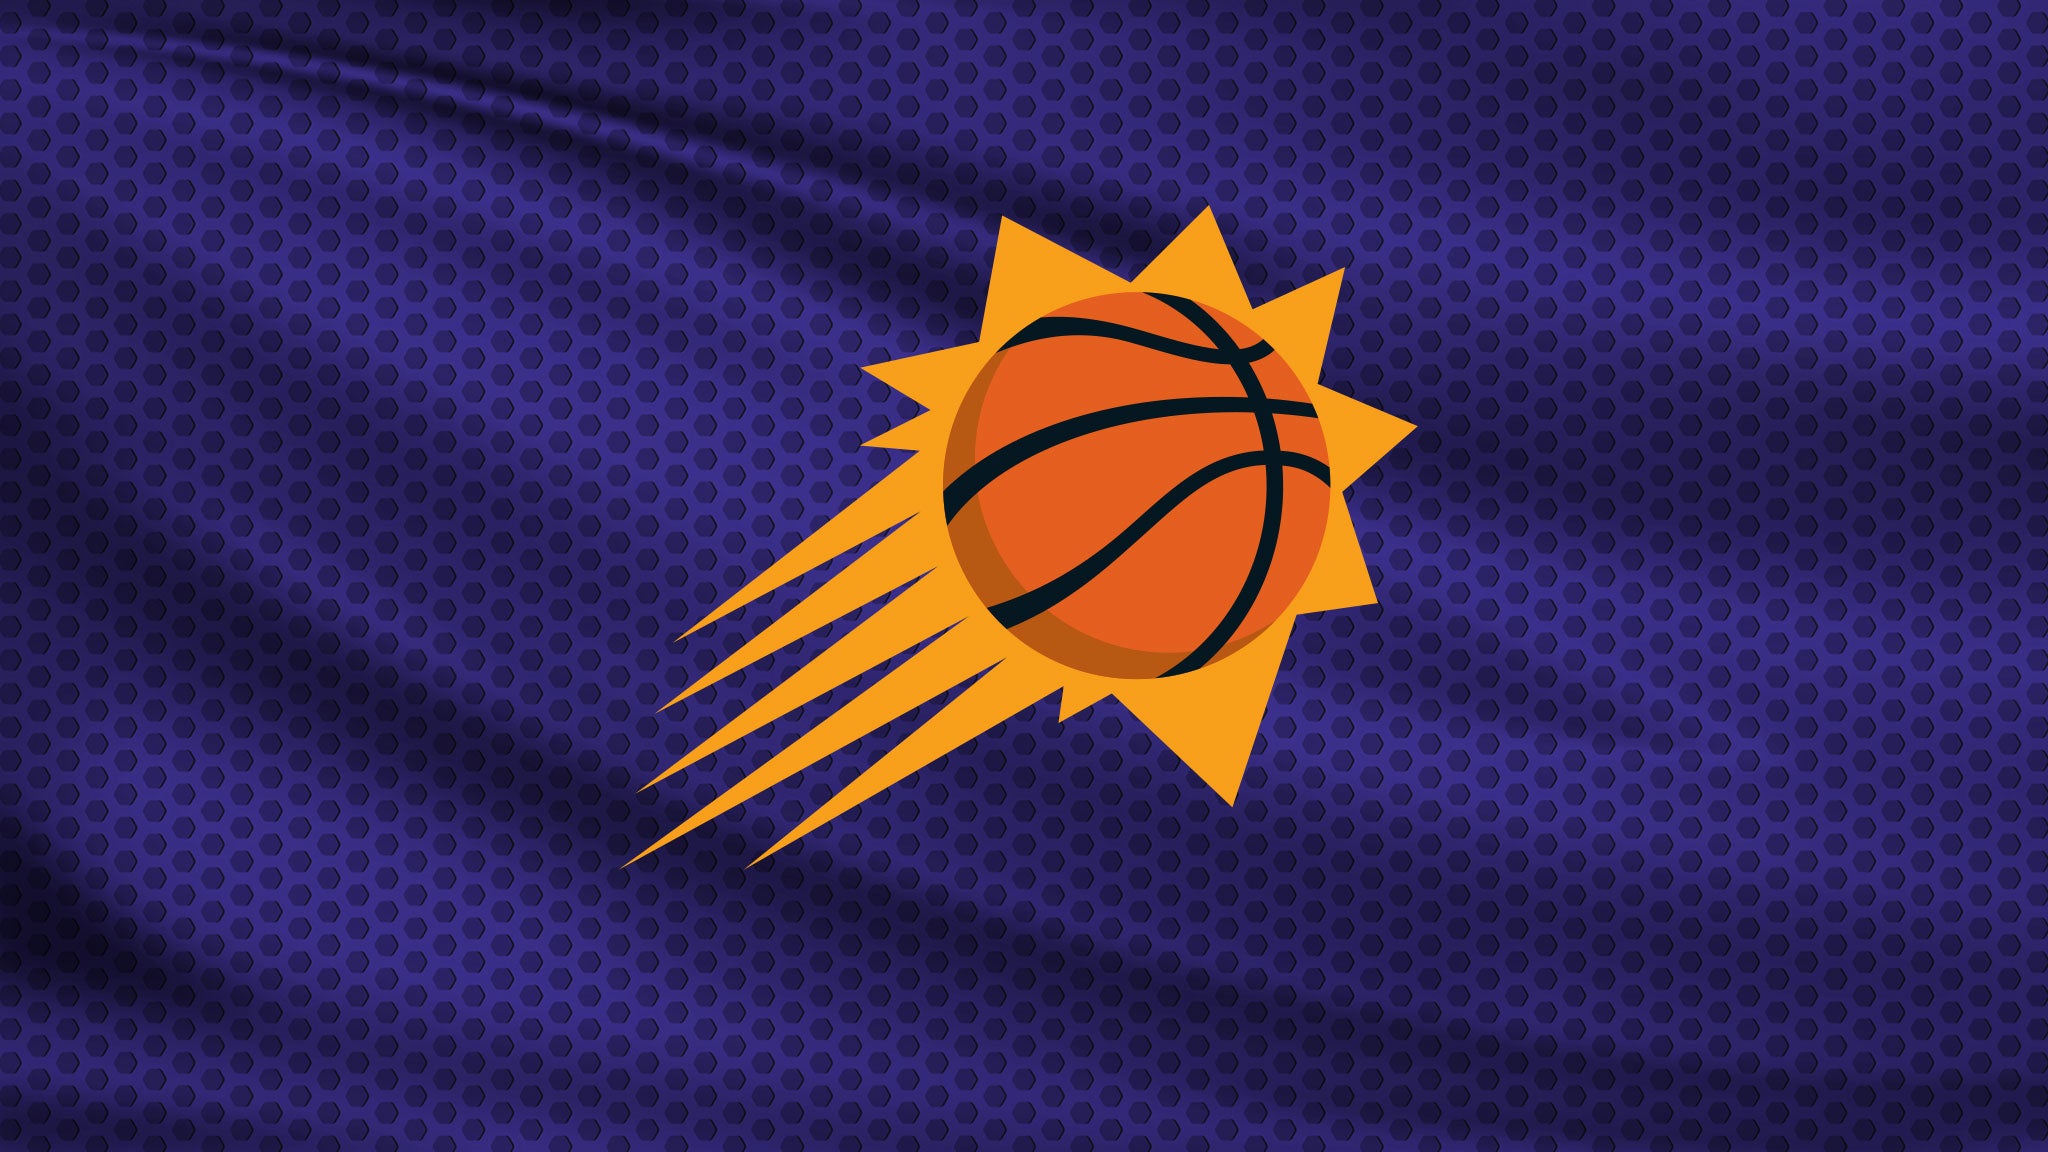 Phoenix Suns vs. New Orleans Pelicans at Footprint Center